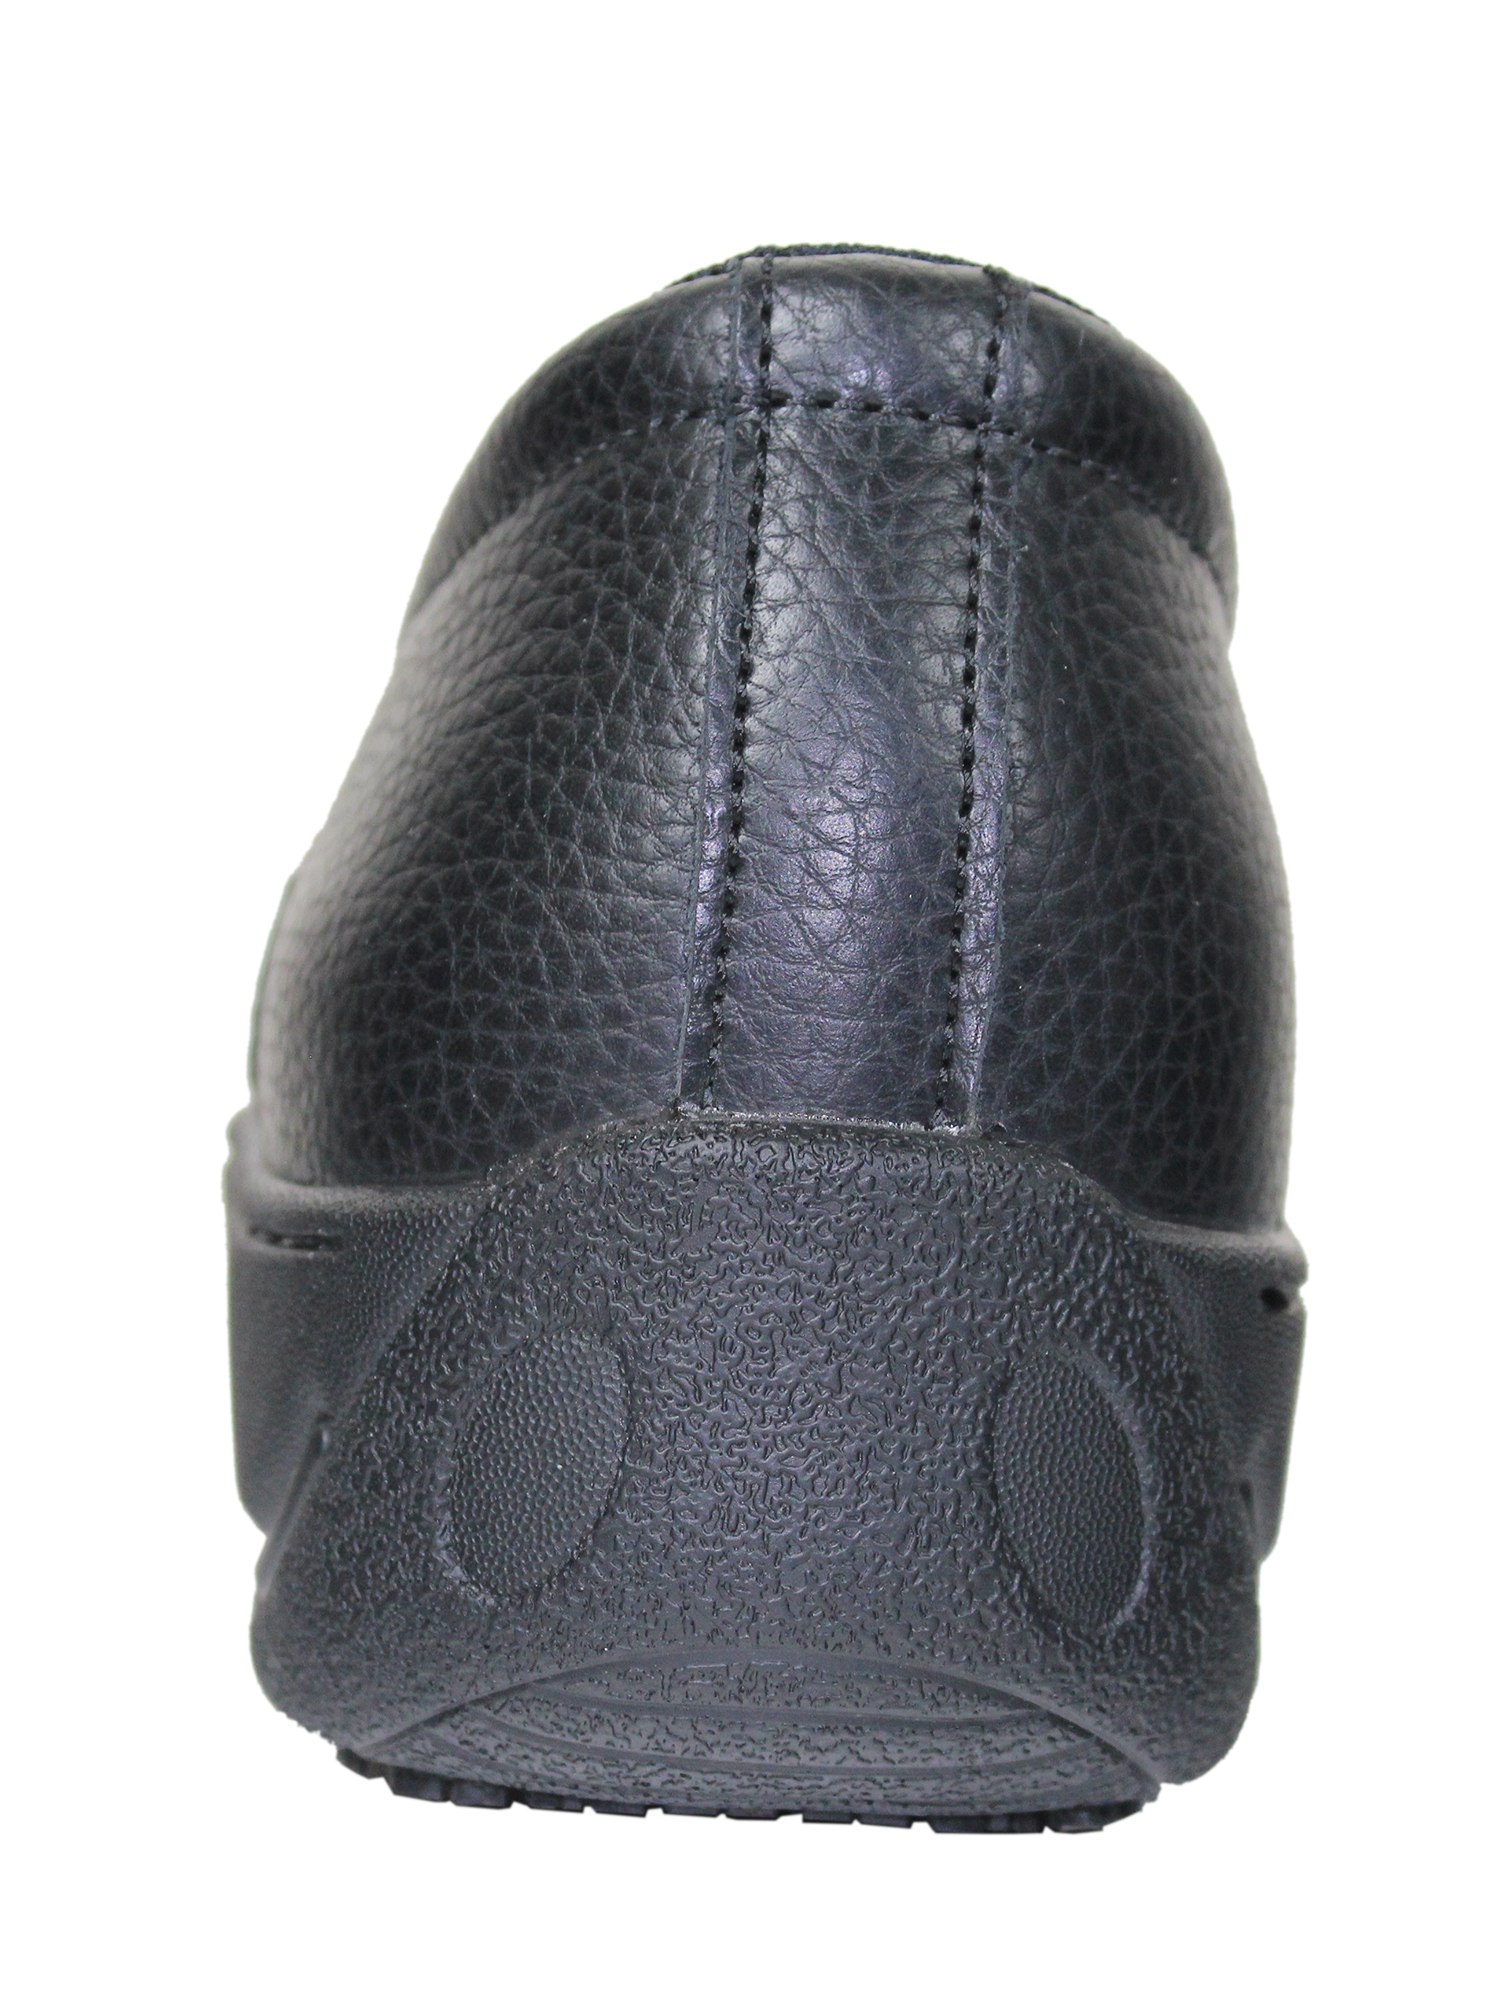 Tanleewa Women's Slip Resistant Work Shoes Waterproof Casual Lightweight Shoe Size 9.5 Adult Male - image 4 of 5